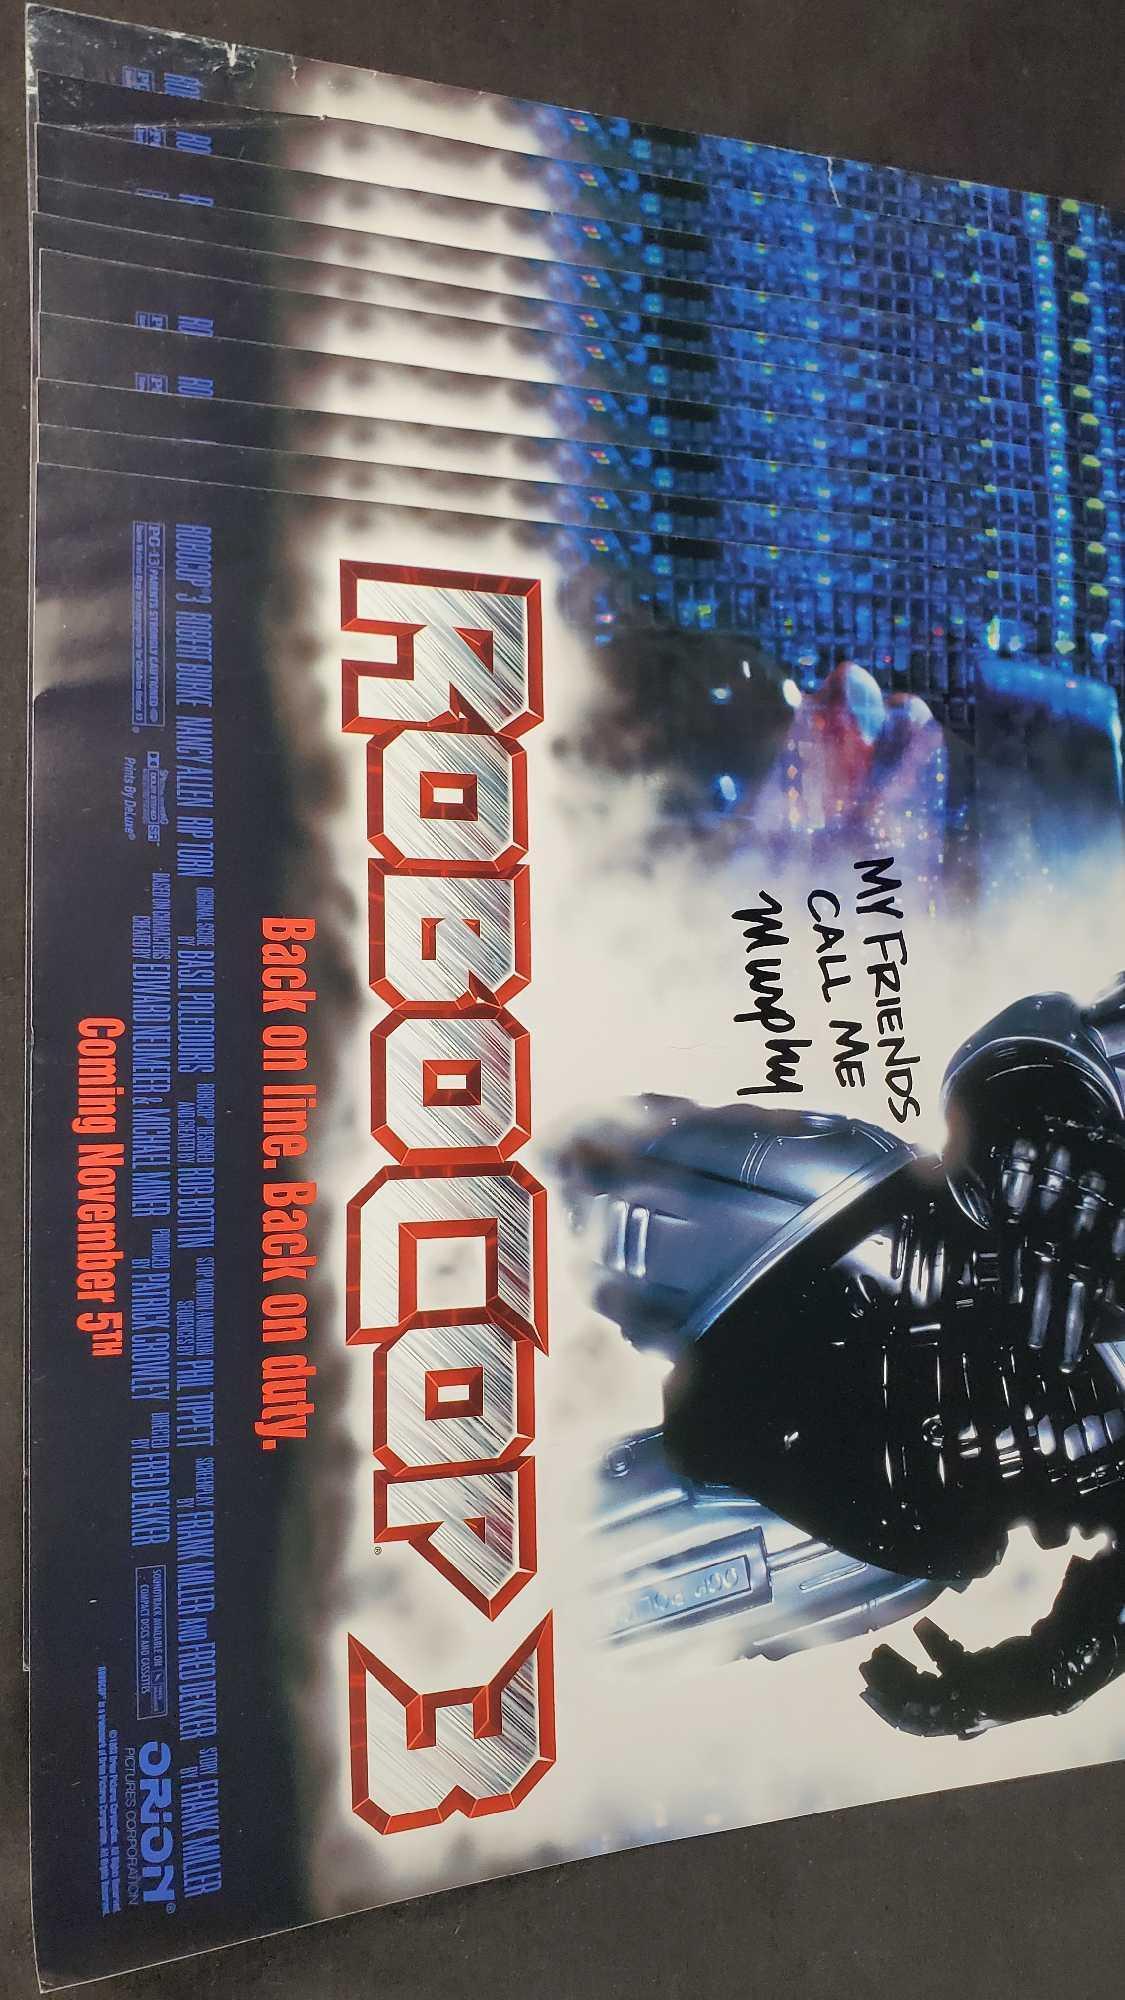 10 Robocop 3 lobby posters/prints 1993